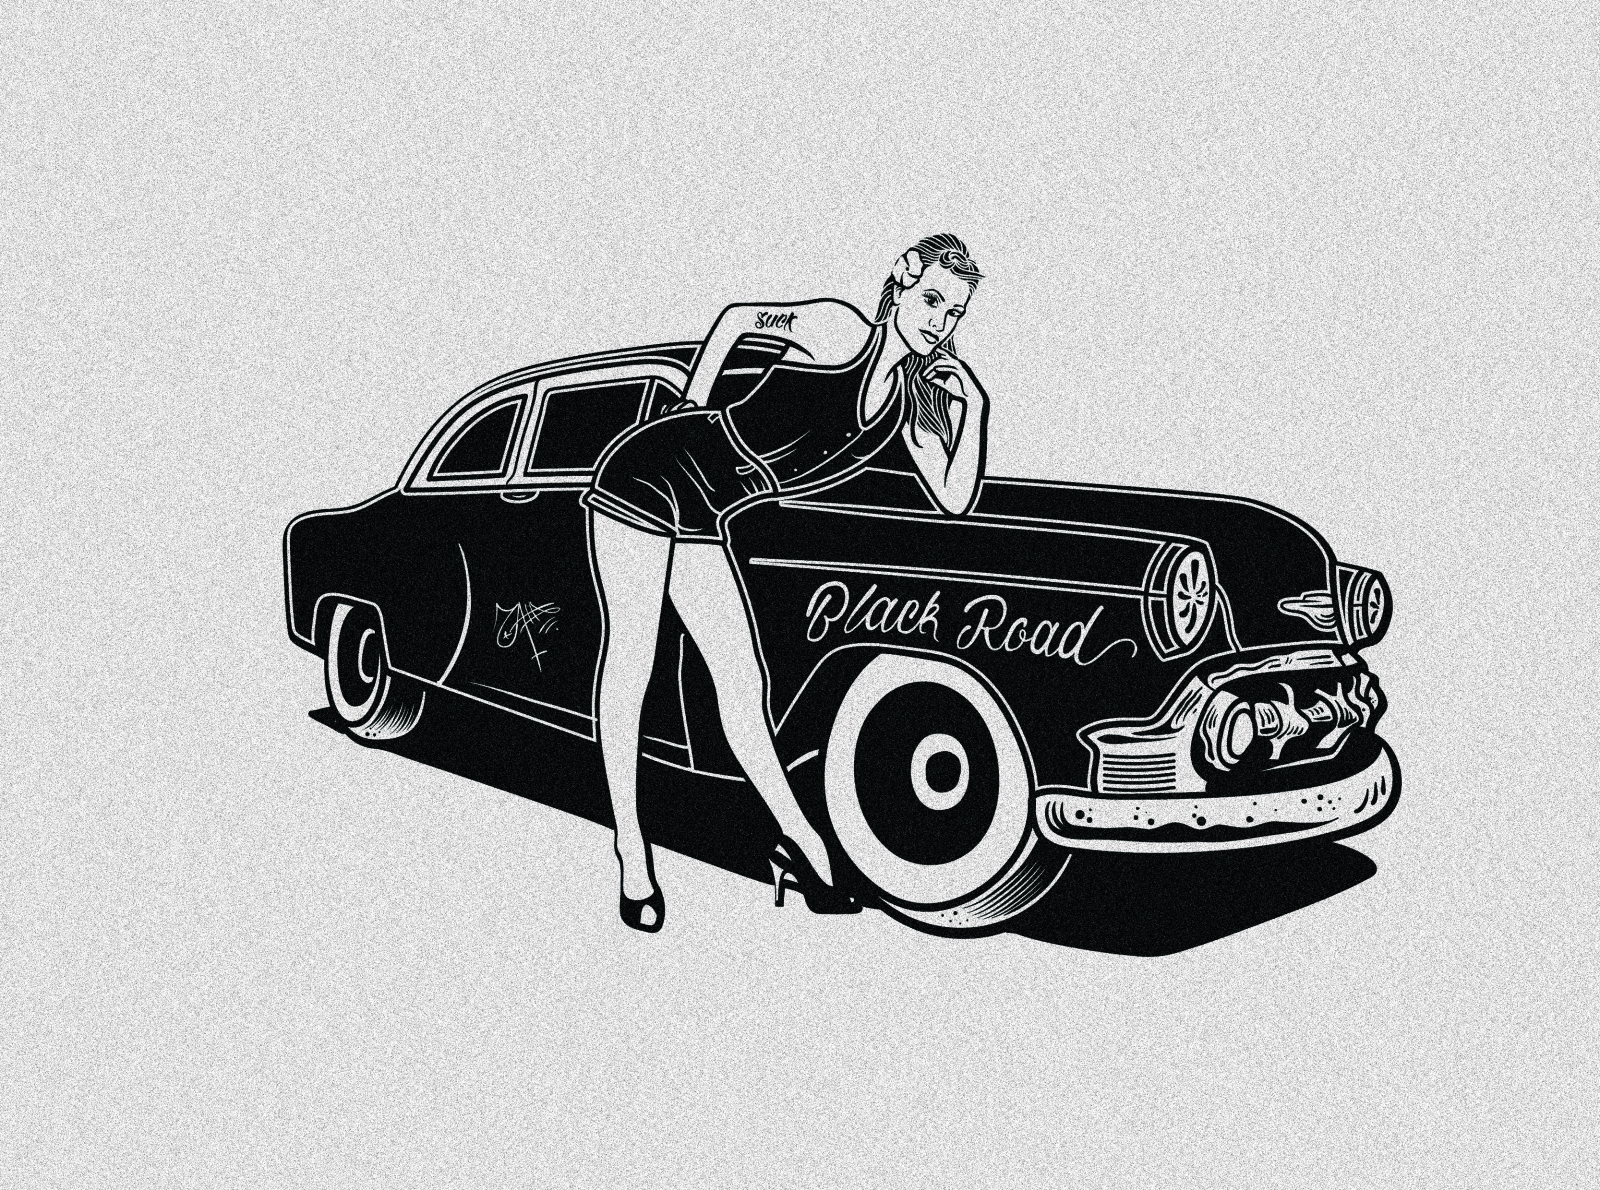 Classic Motors Shelby Cobra Pin Up Girl Retro Vintage Sign Blechschild Schild 